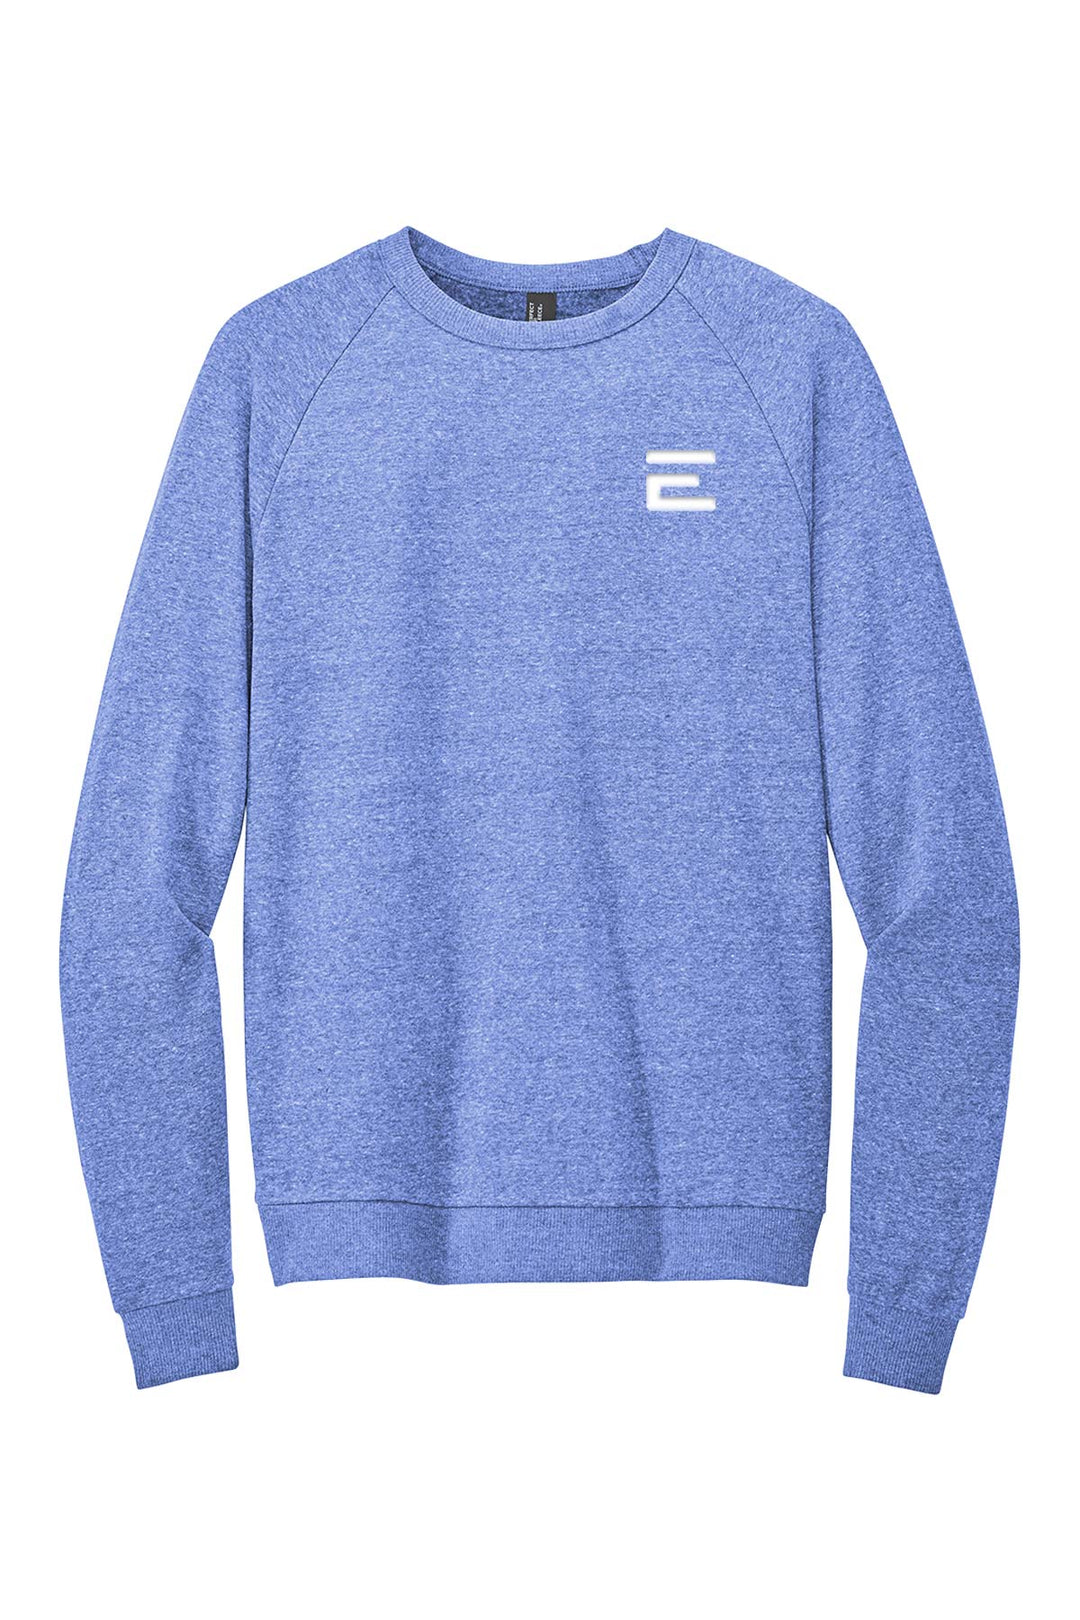 Perfect Tri Fleece Crewneck Sweatshirt